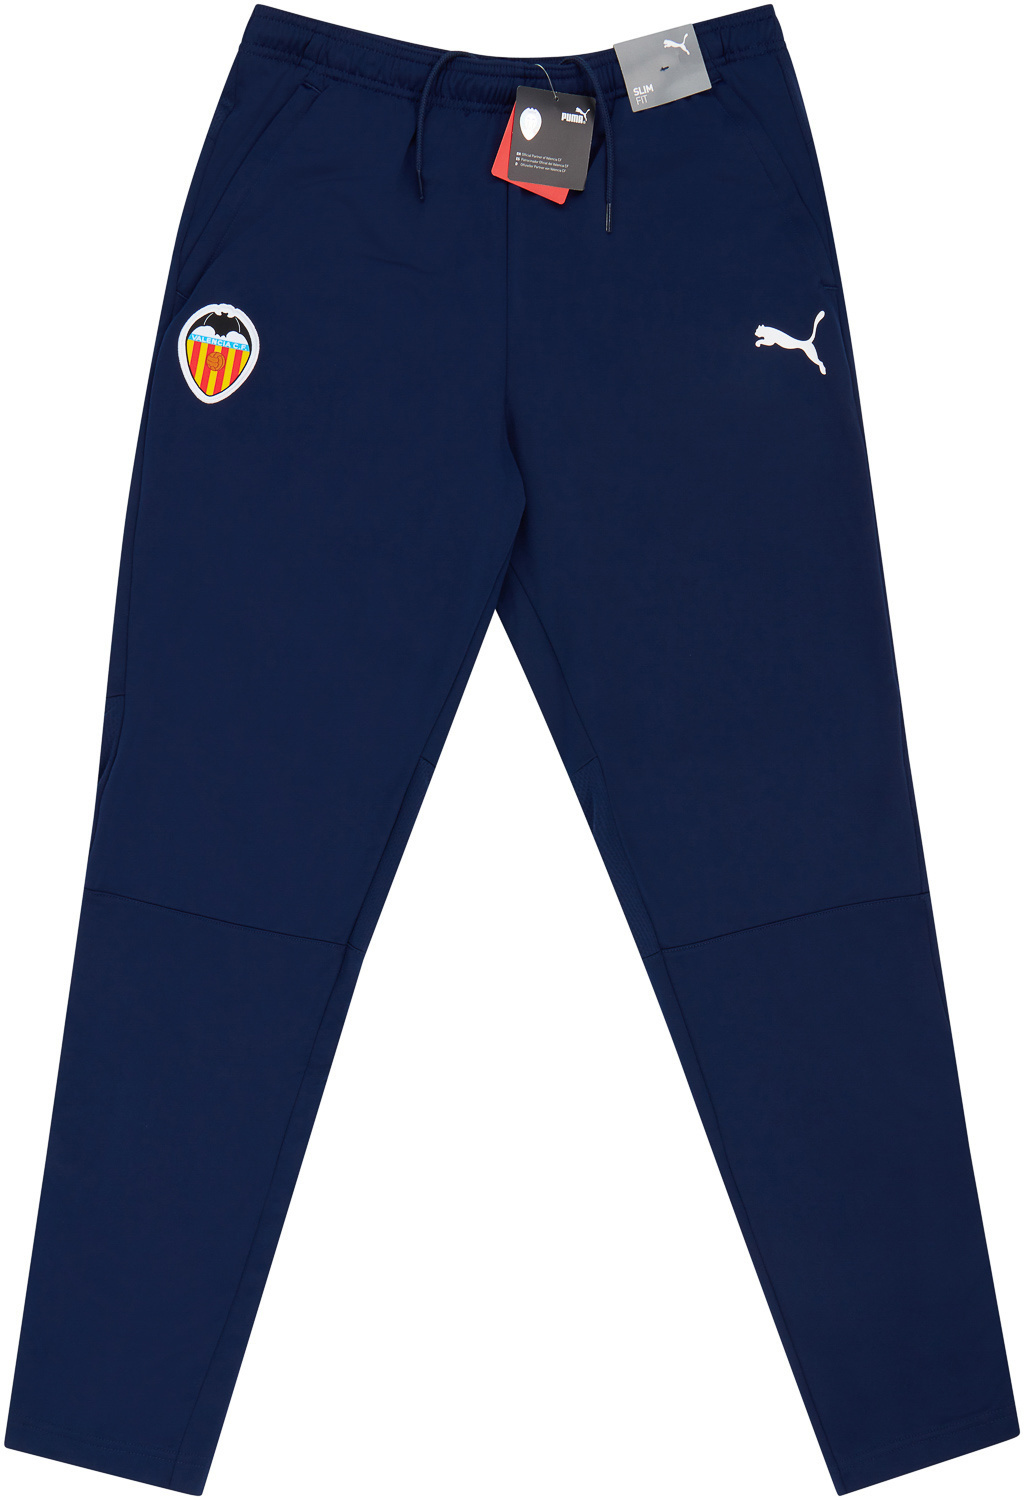 Valencia Puma Training Pants/Bottoms - NEW - (XS)